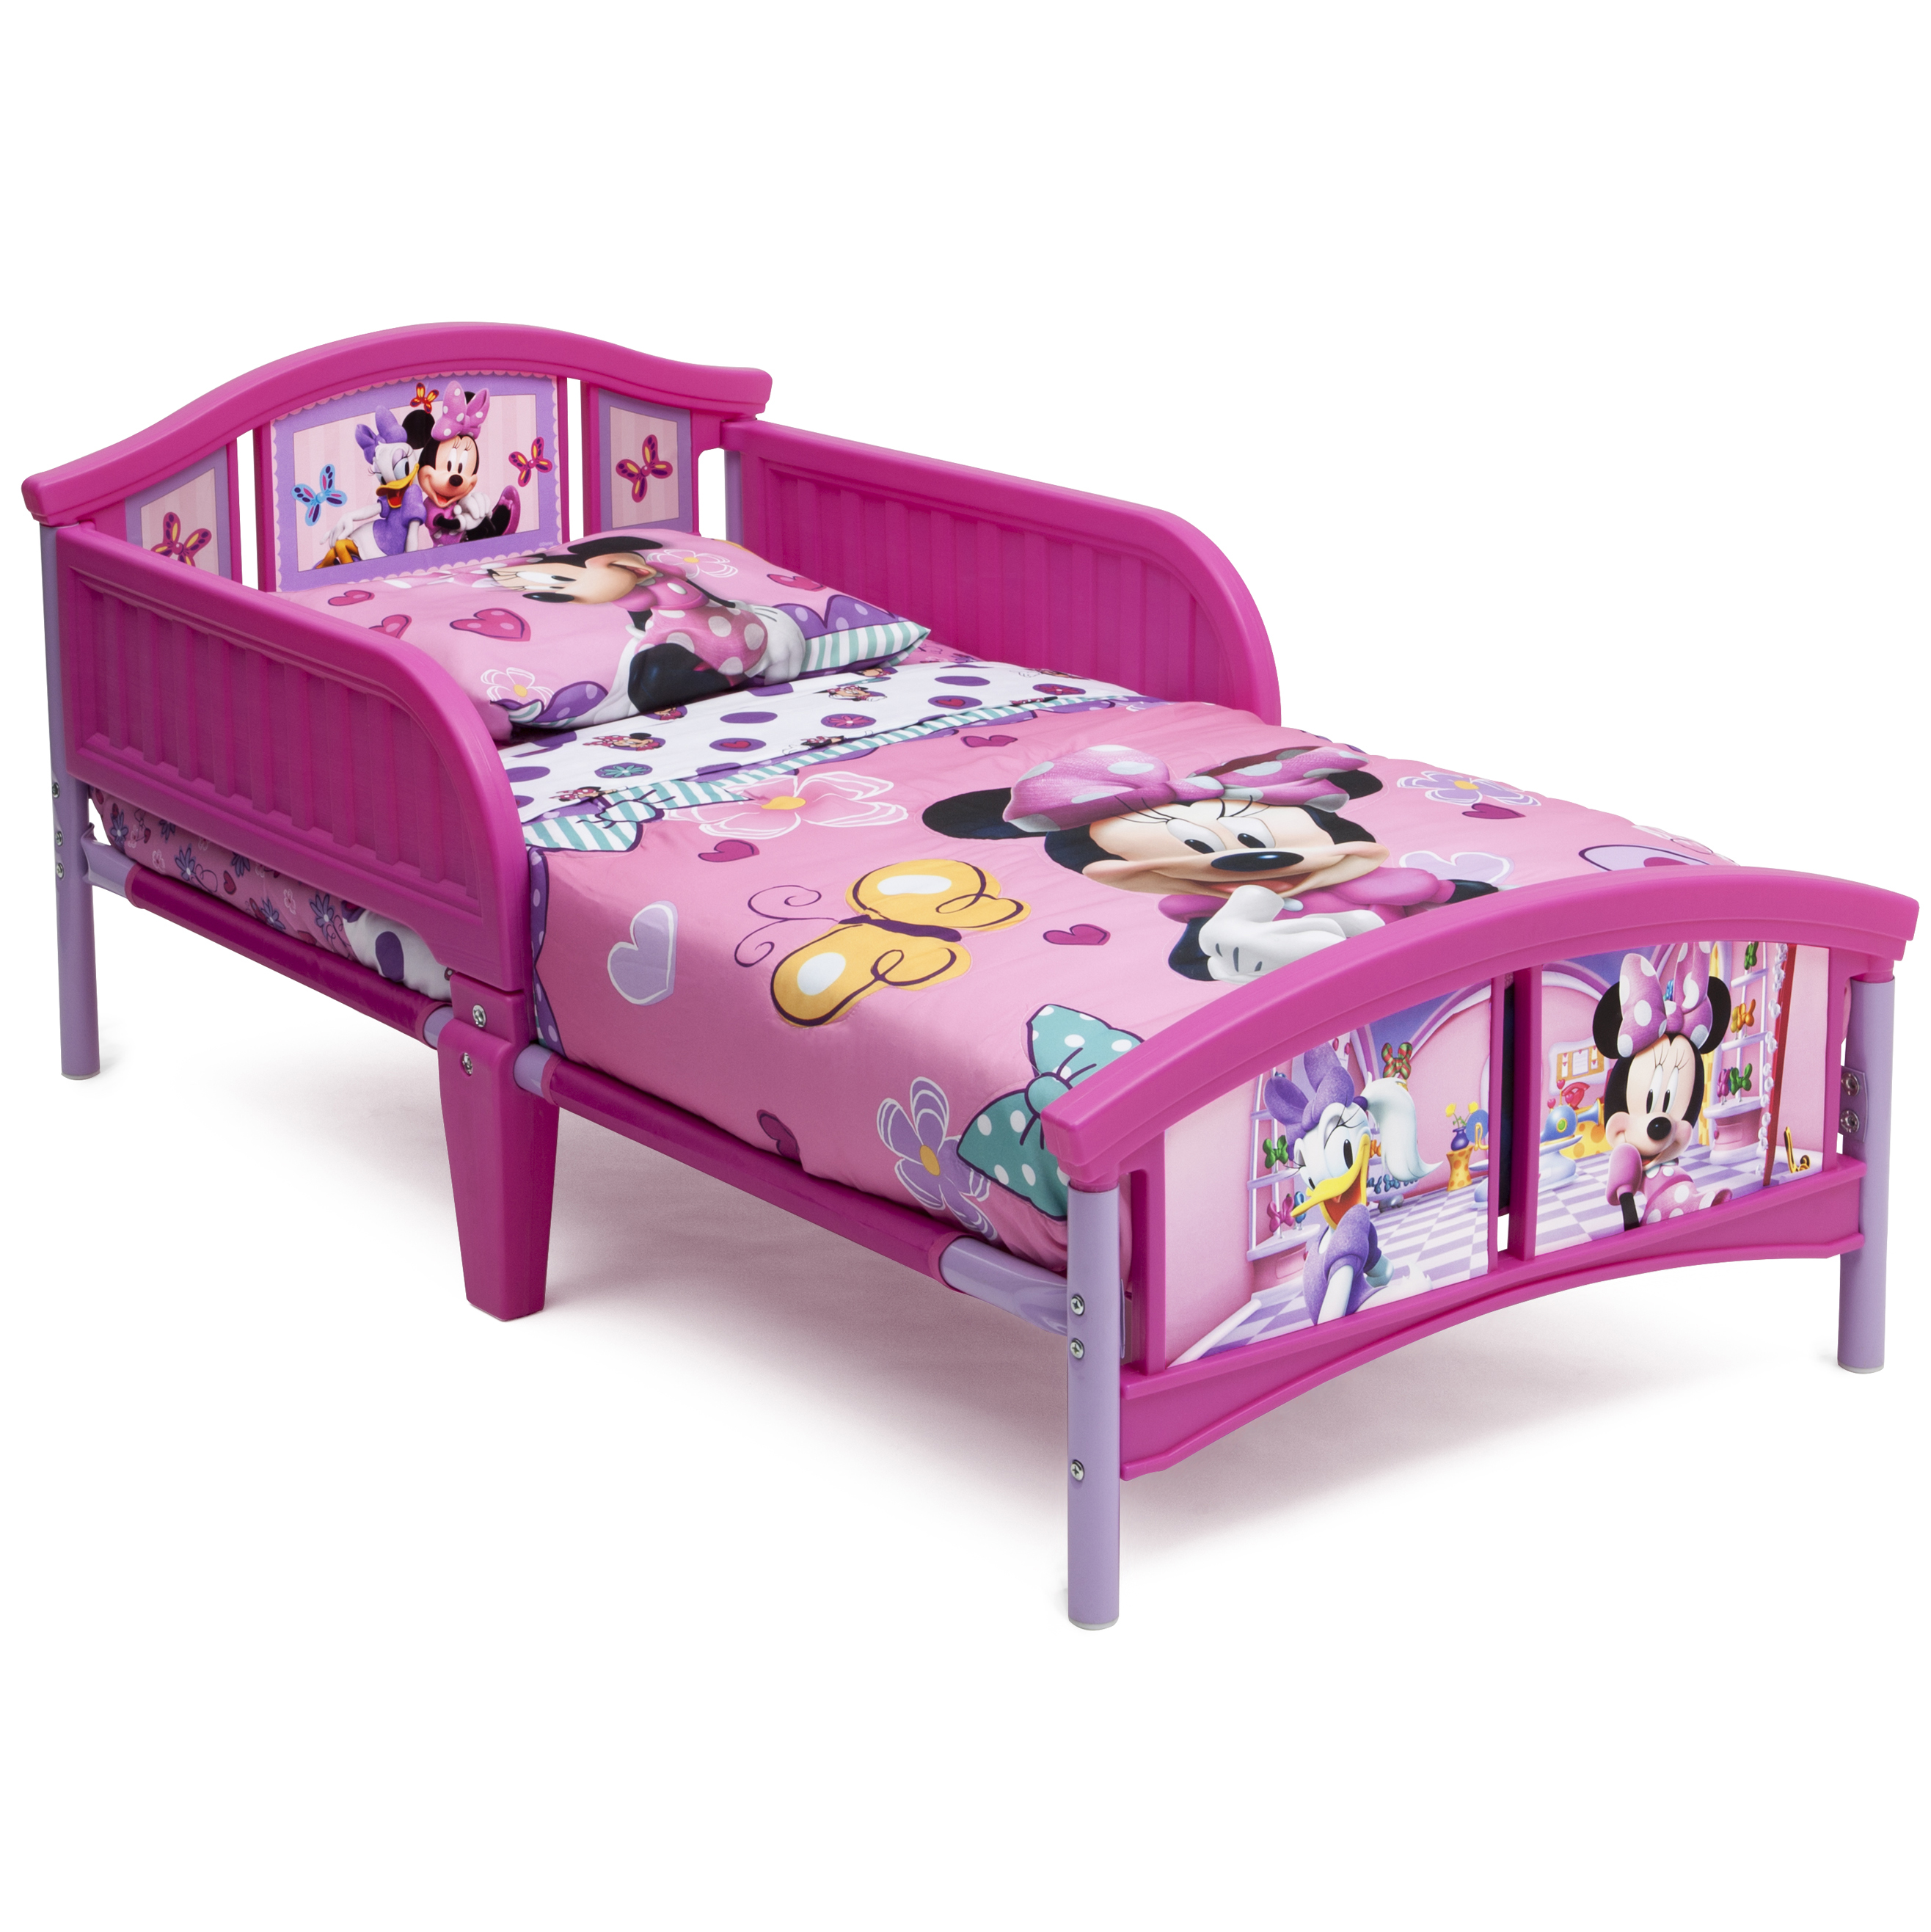 Delta Children Disney Minnie Mouse Plastic Toddler Bed, Pink - Traveller Location